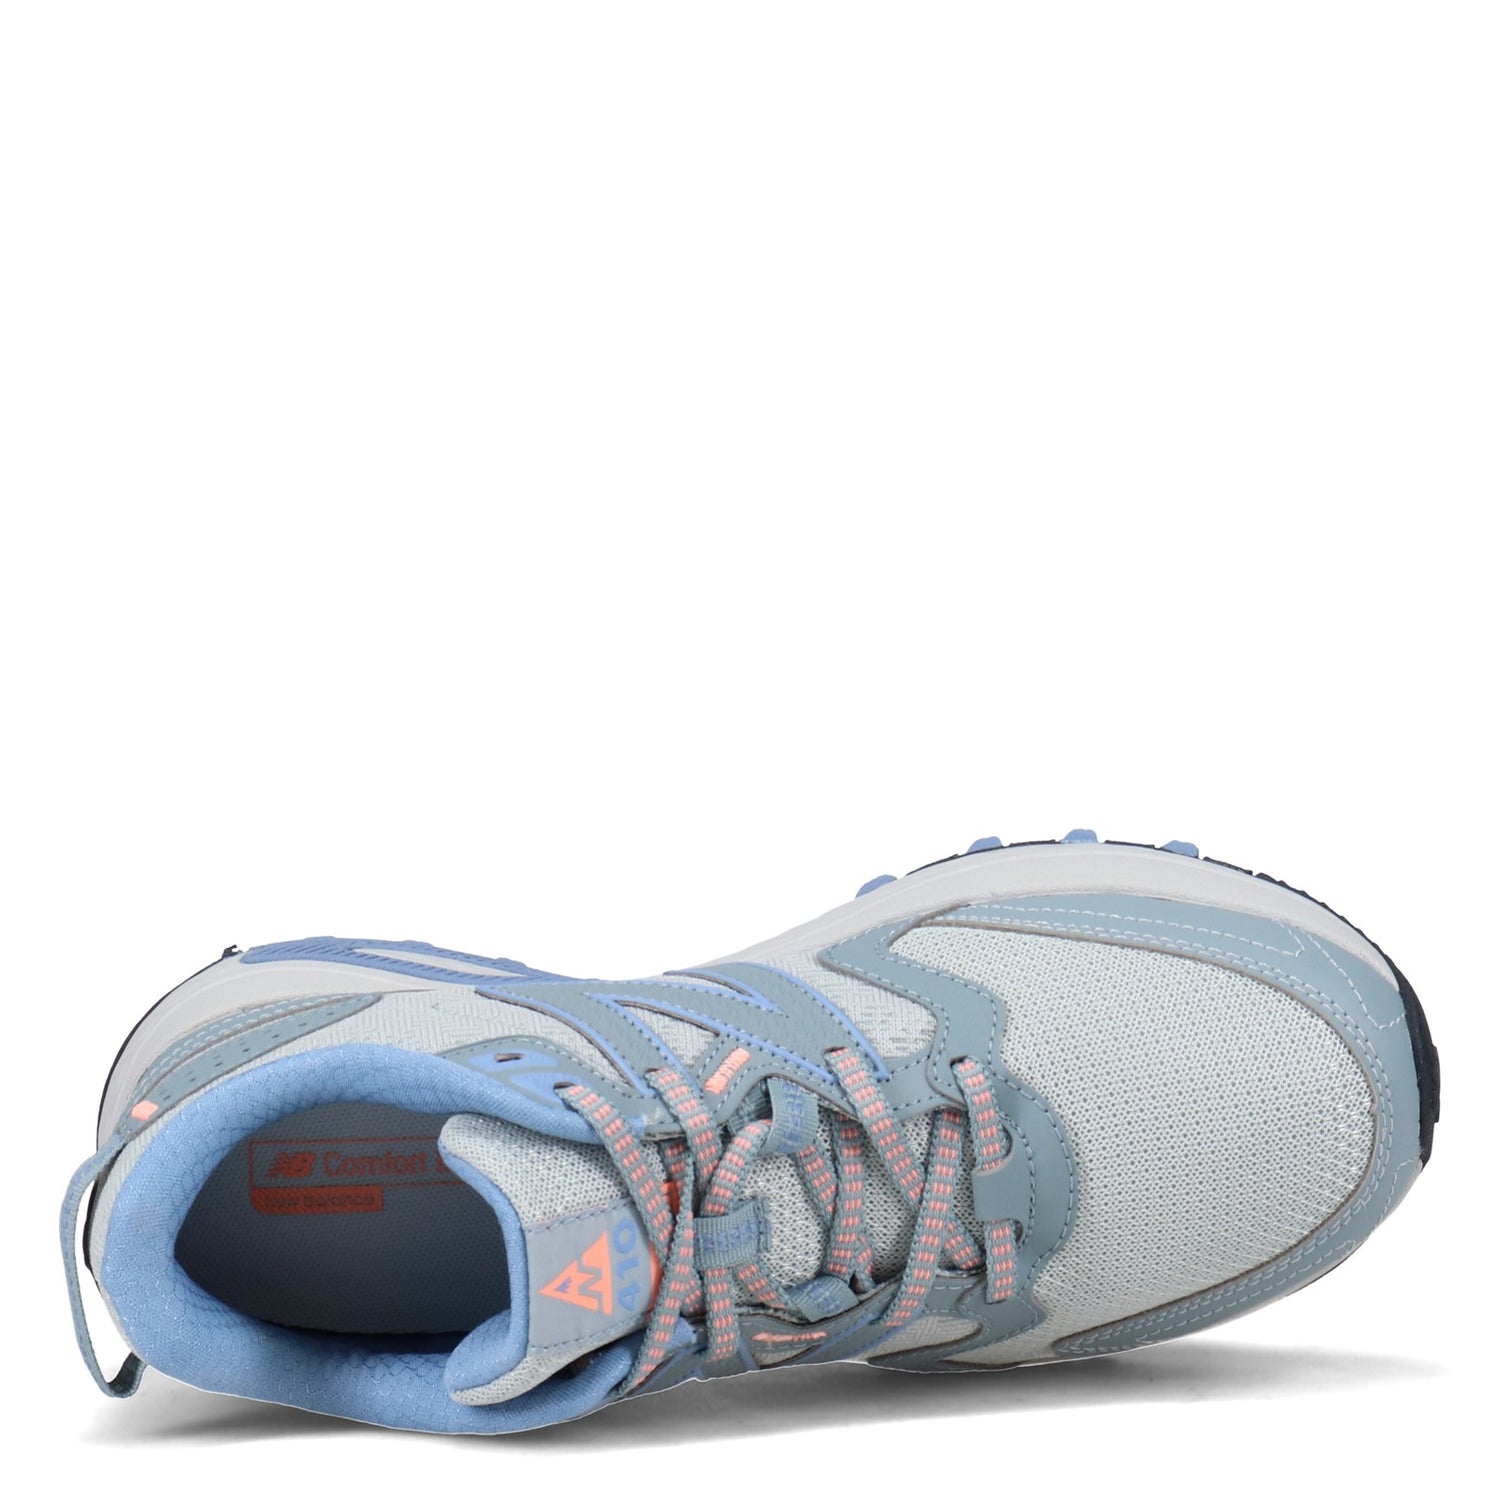 Peltz Shoes  Women's New Balance 410V7 Trail Running Shoe GREY BLUE WT410LG7